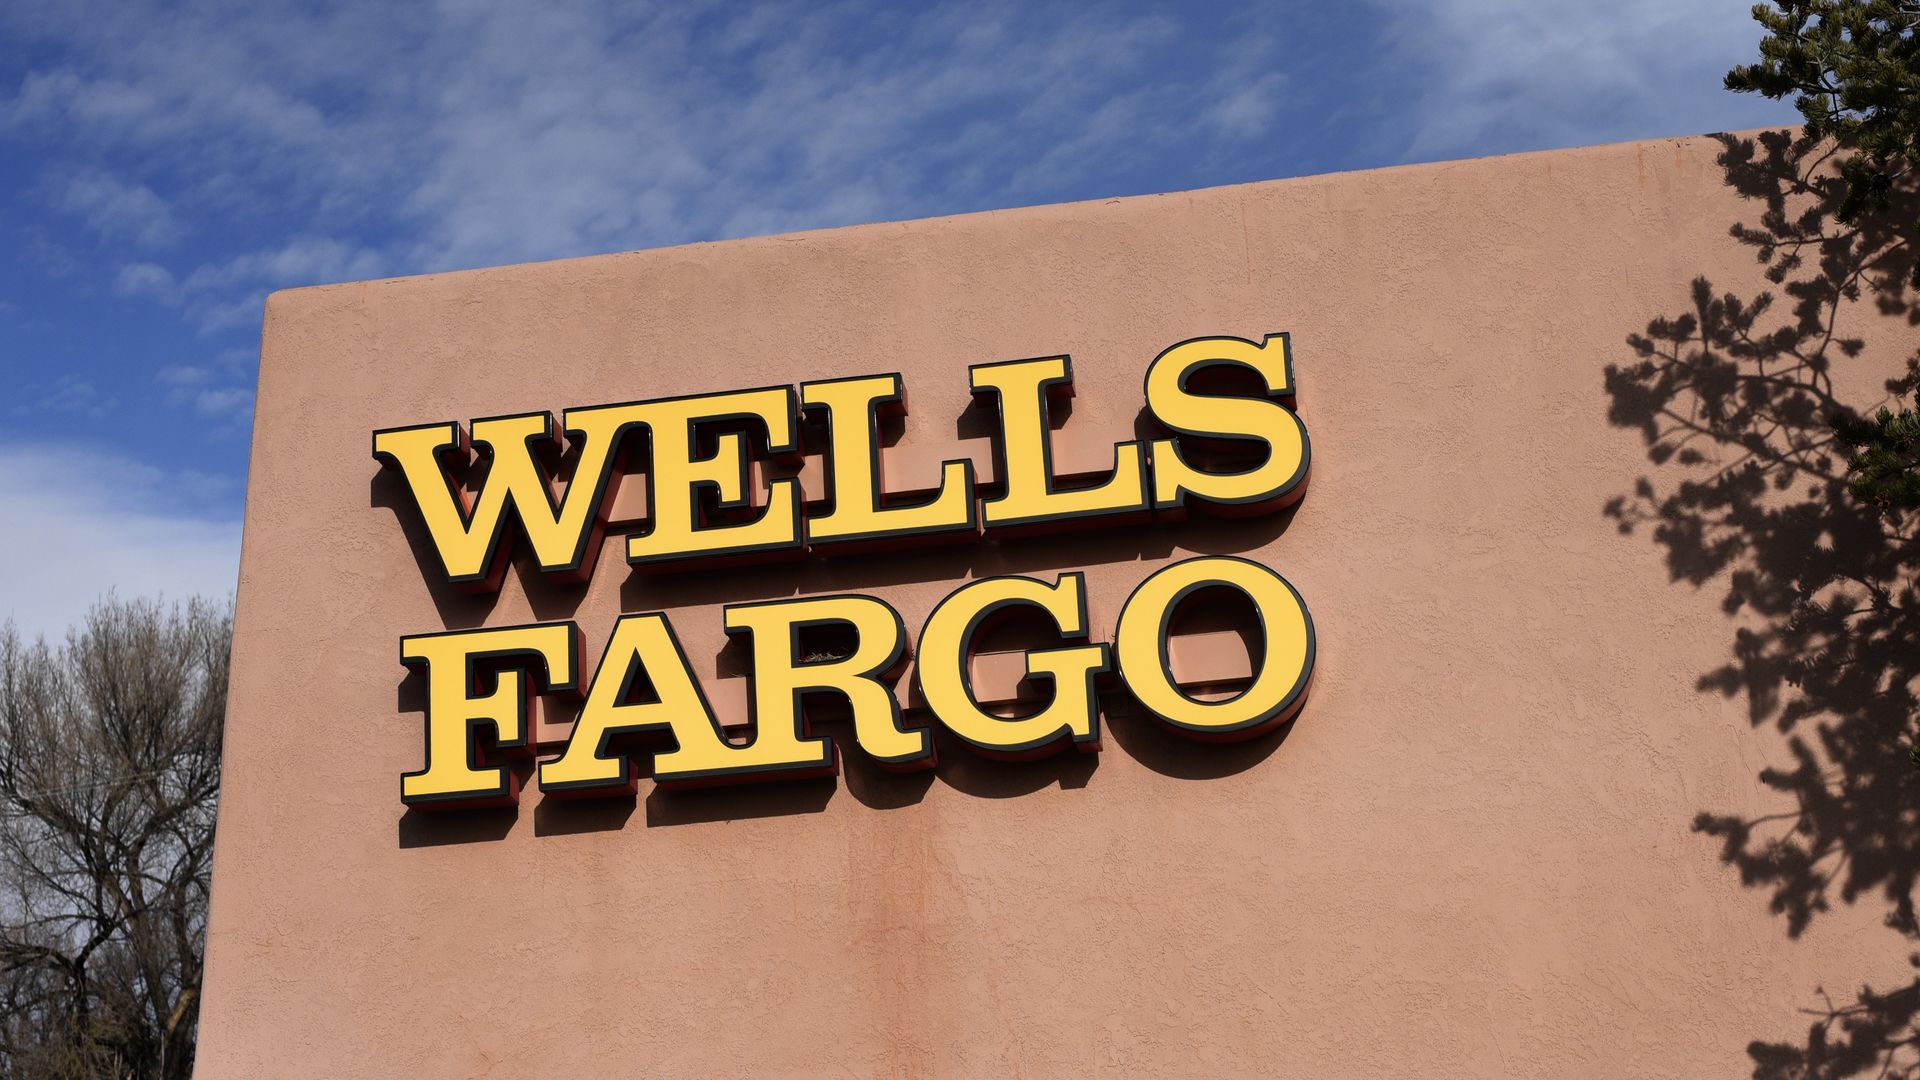 Wells Fargo logo on side of bank